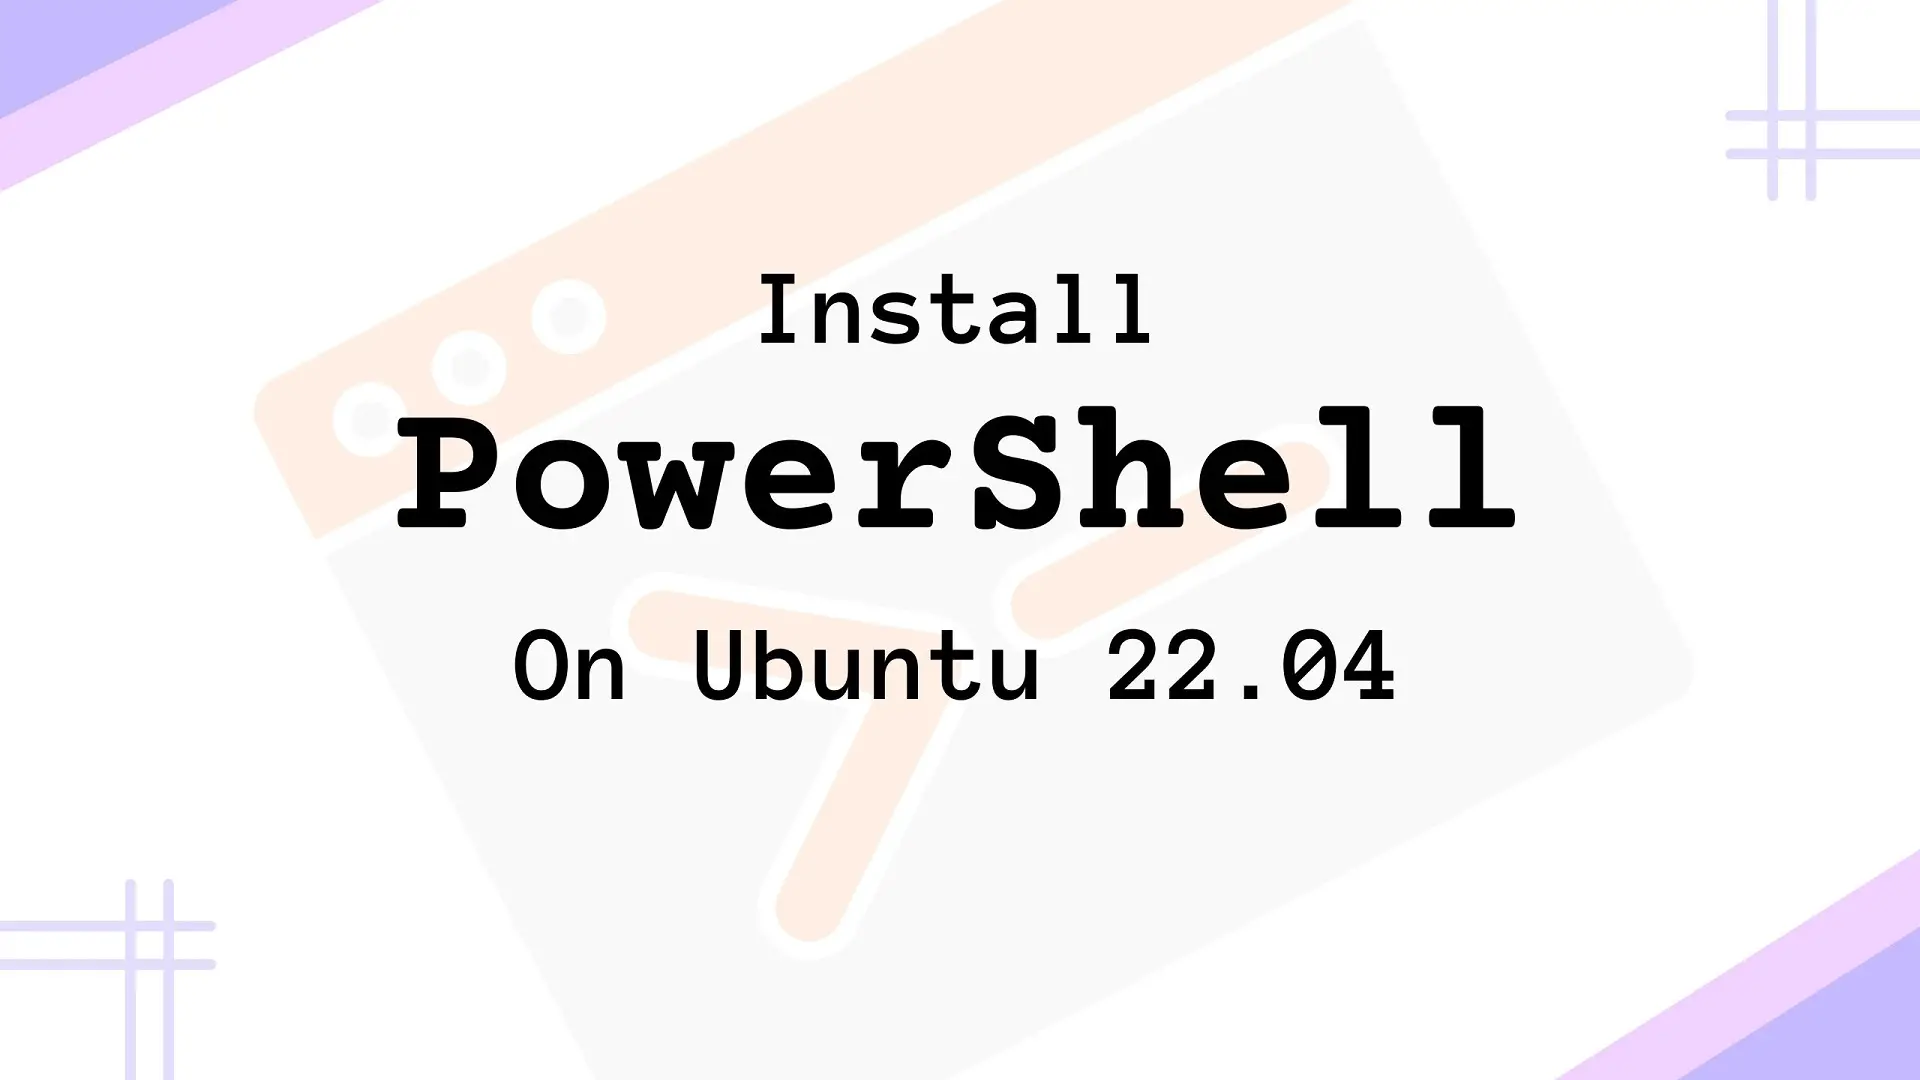 Install PowerShell on Ubuntu 22.04